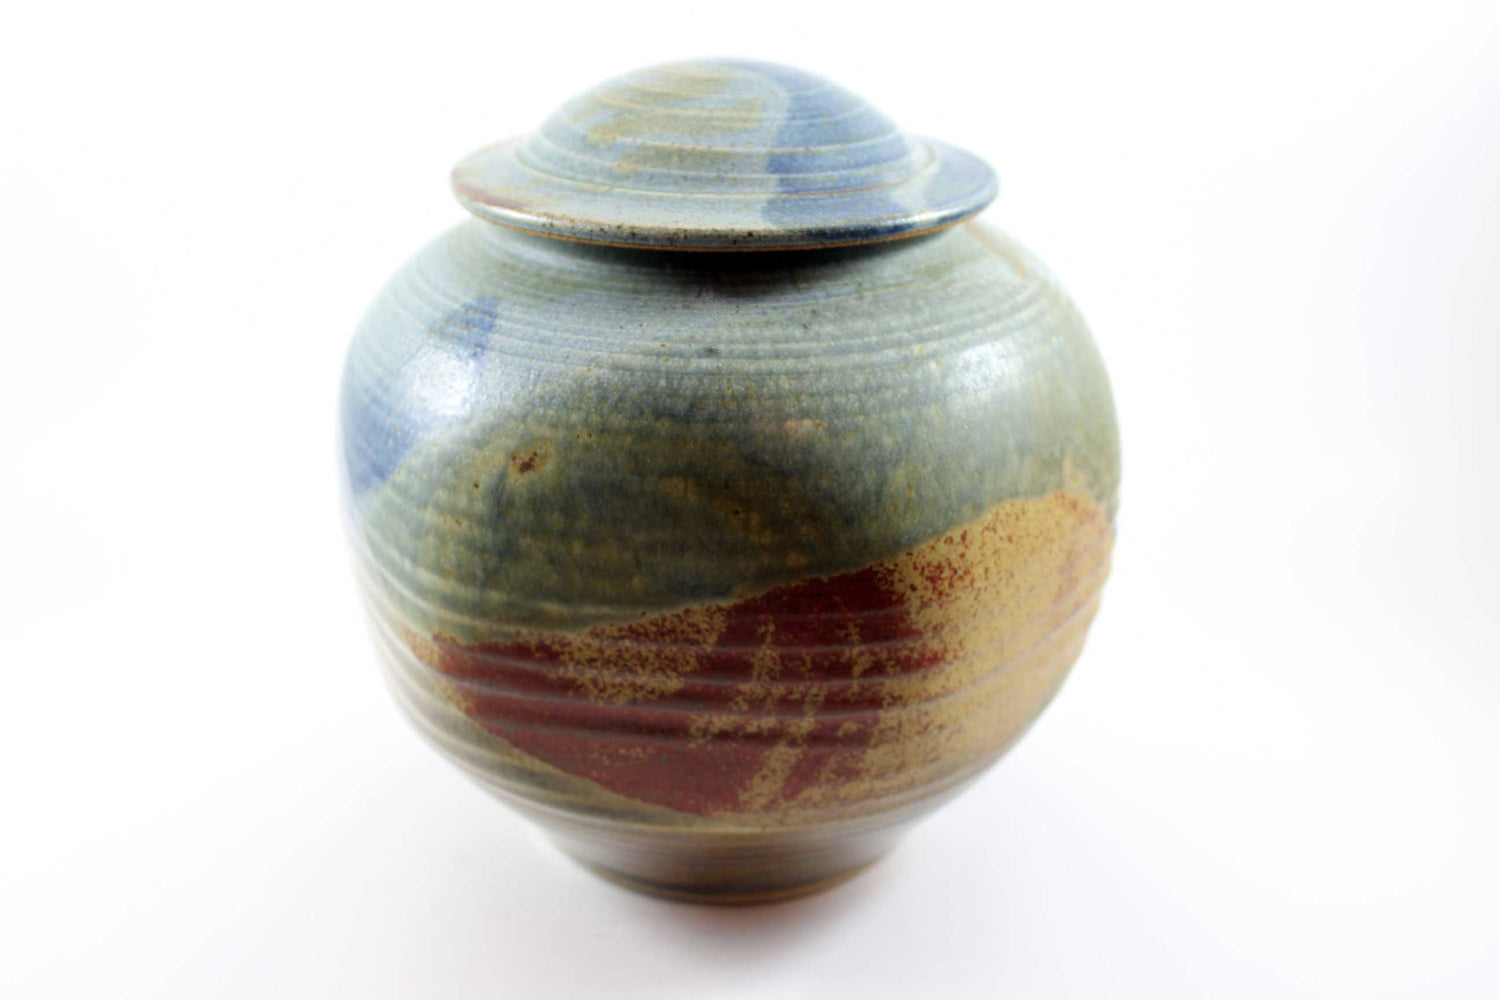 Six Sided Ceramic Jar with Lid